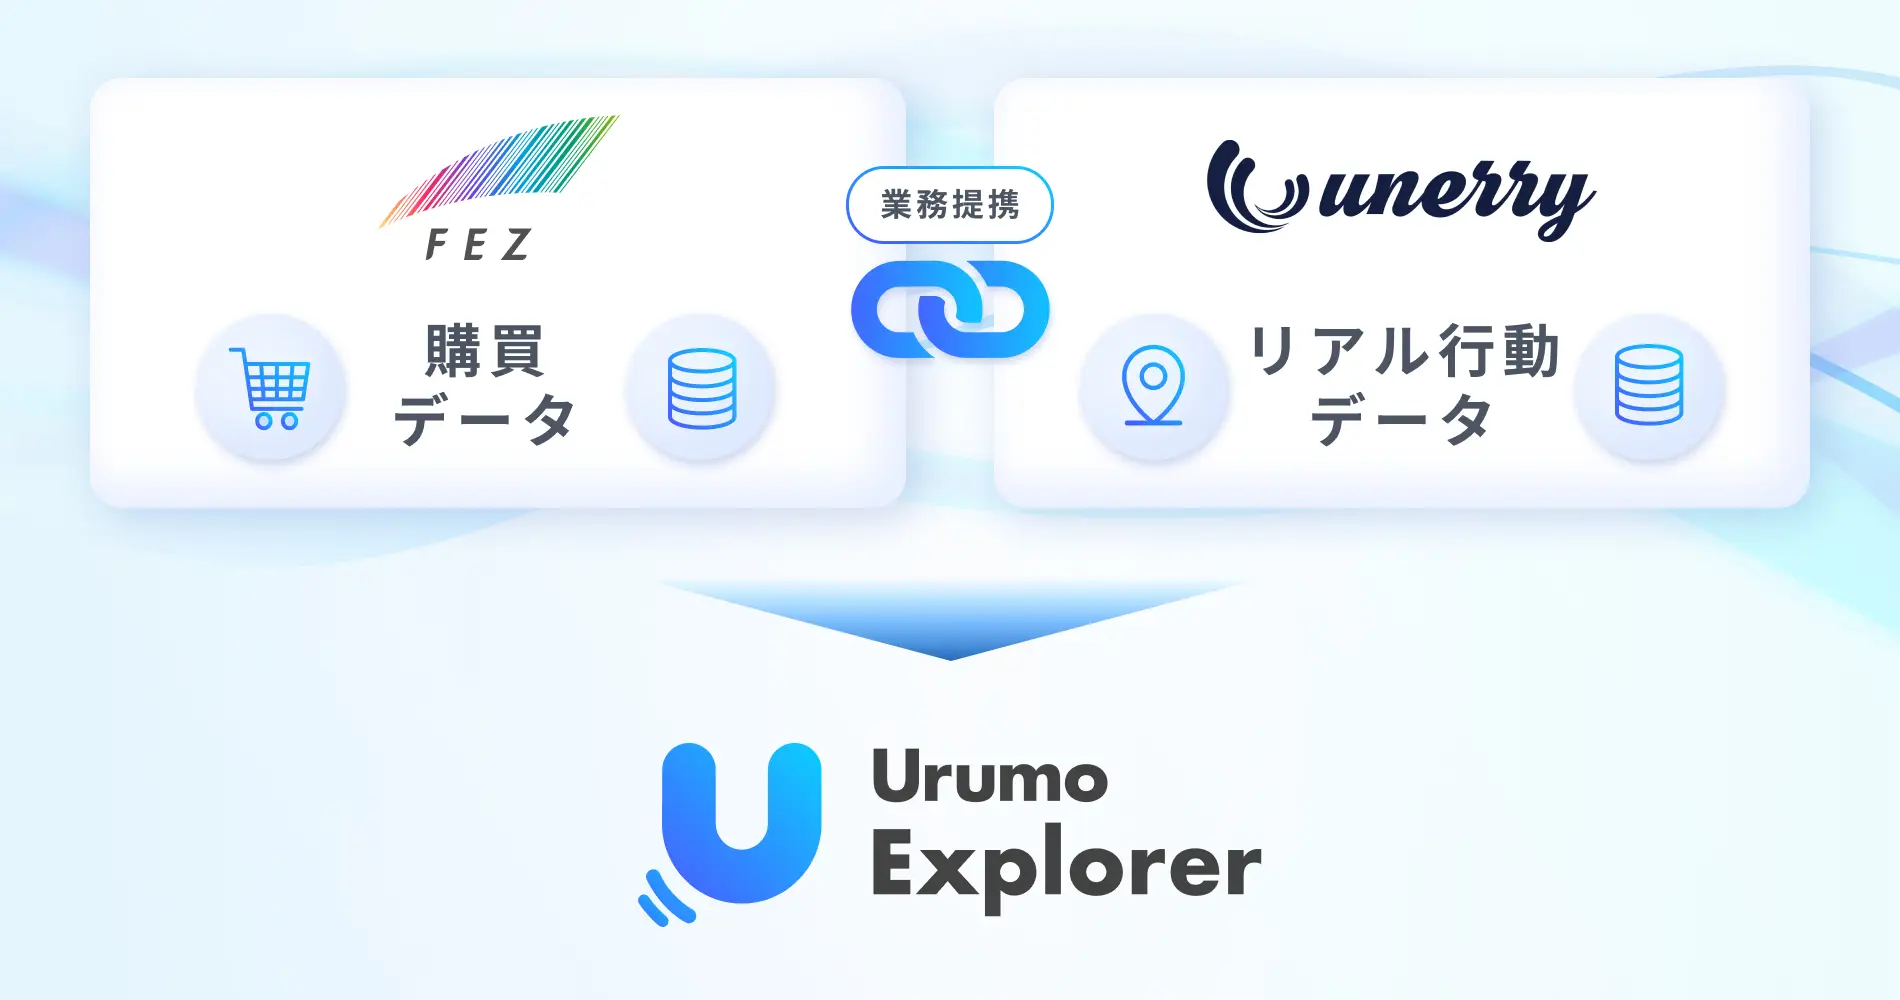 「ZDNet Japan」にてunerry社との業務提携および『Urumo Explorer』に関する記事が掲載されました